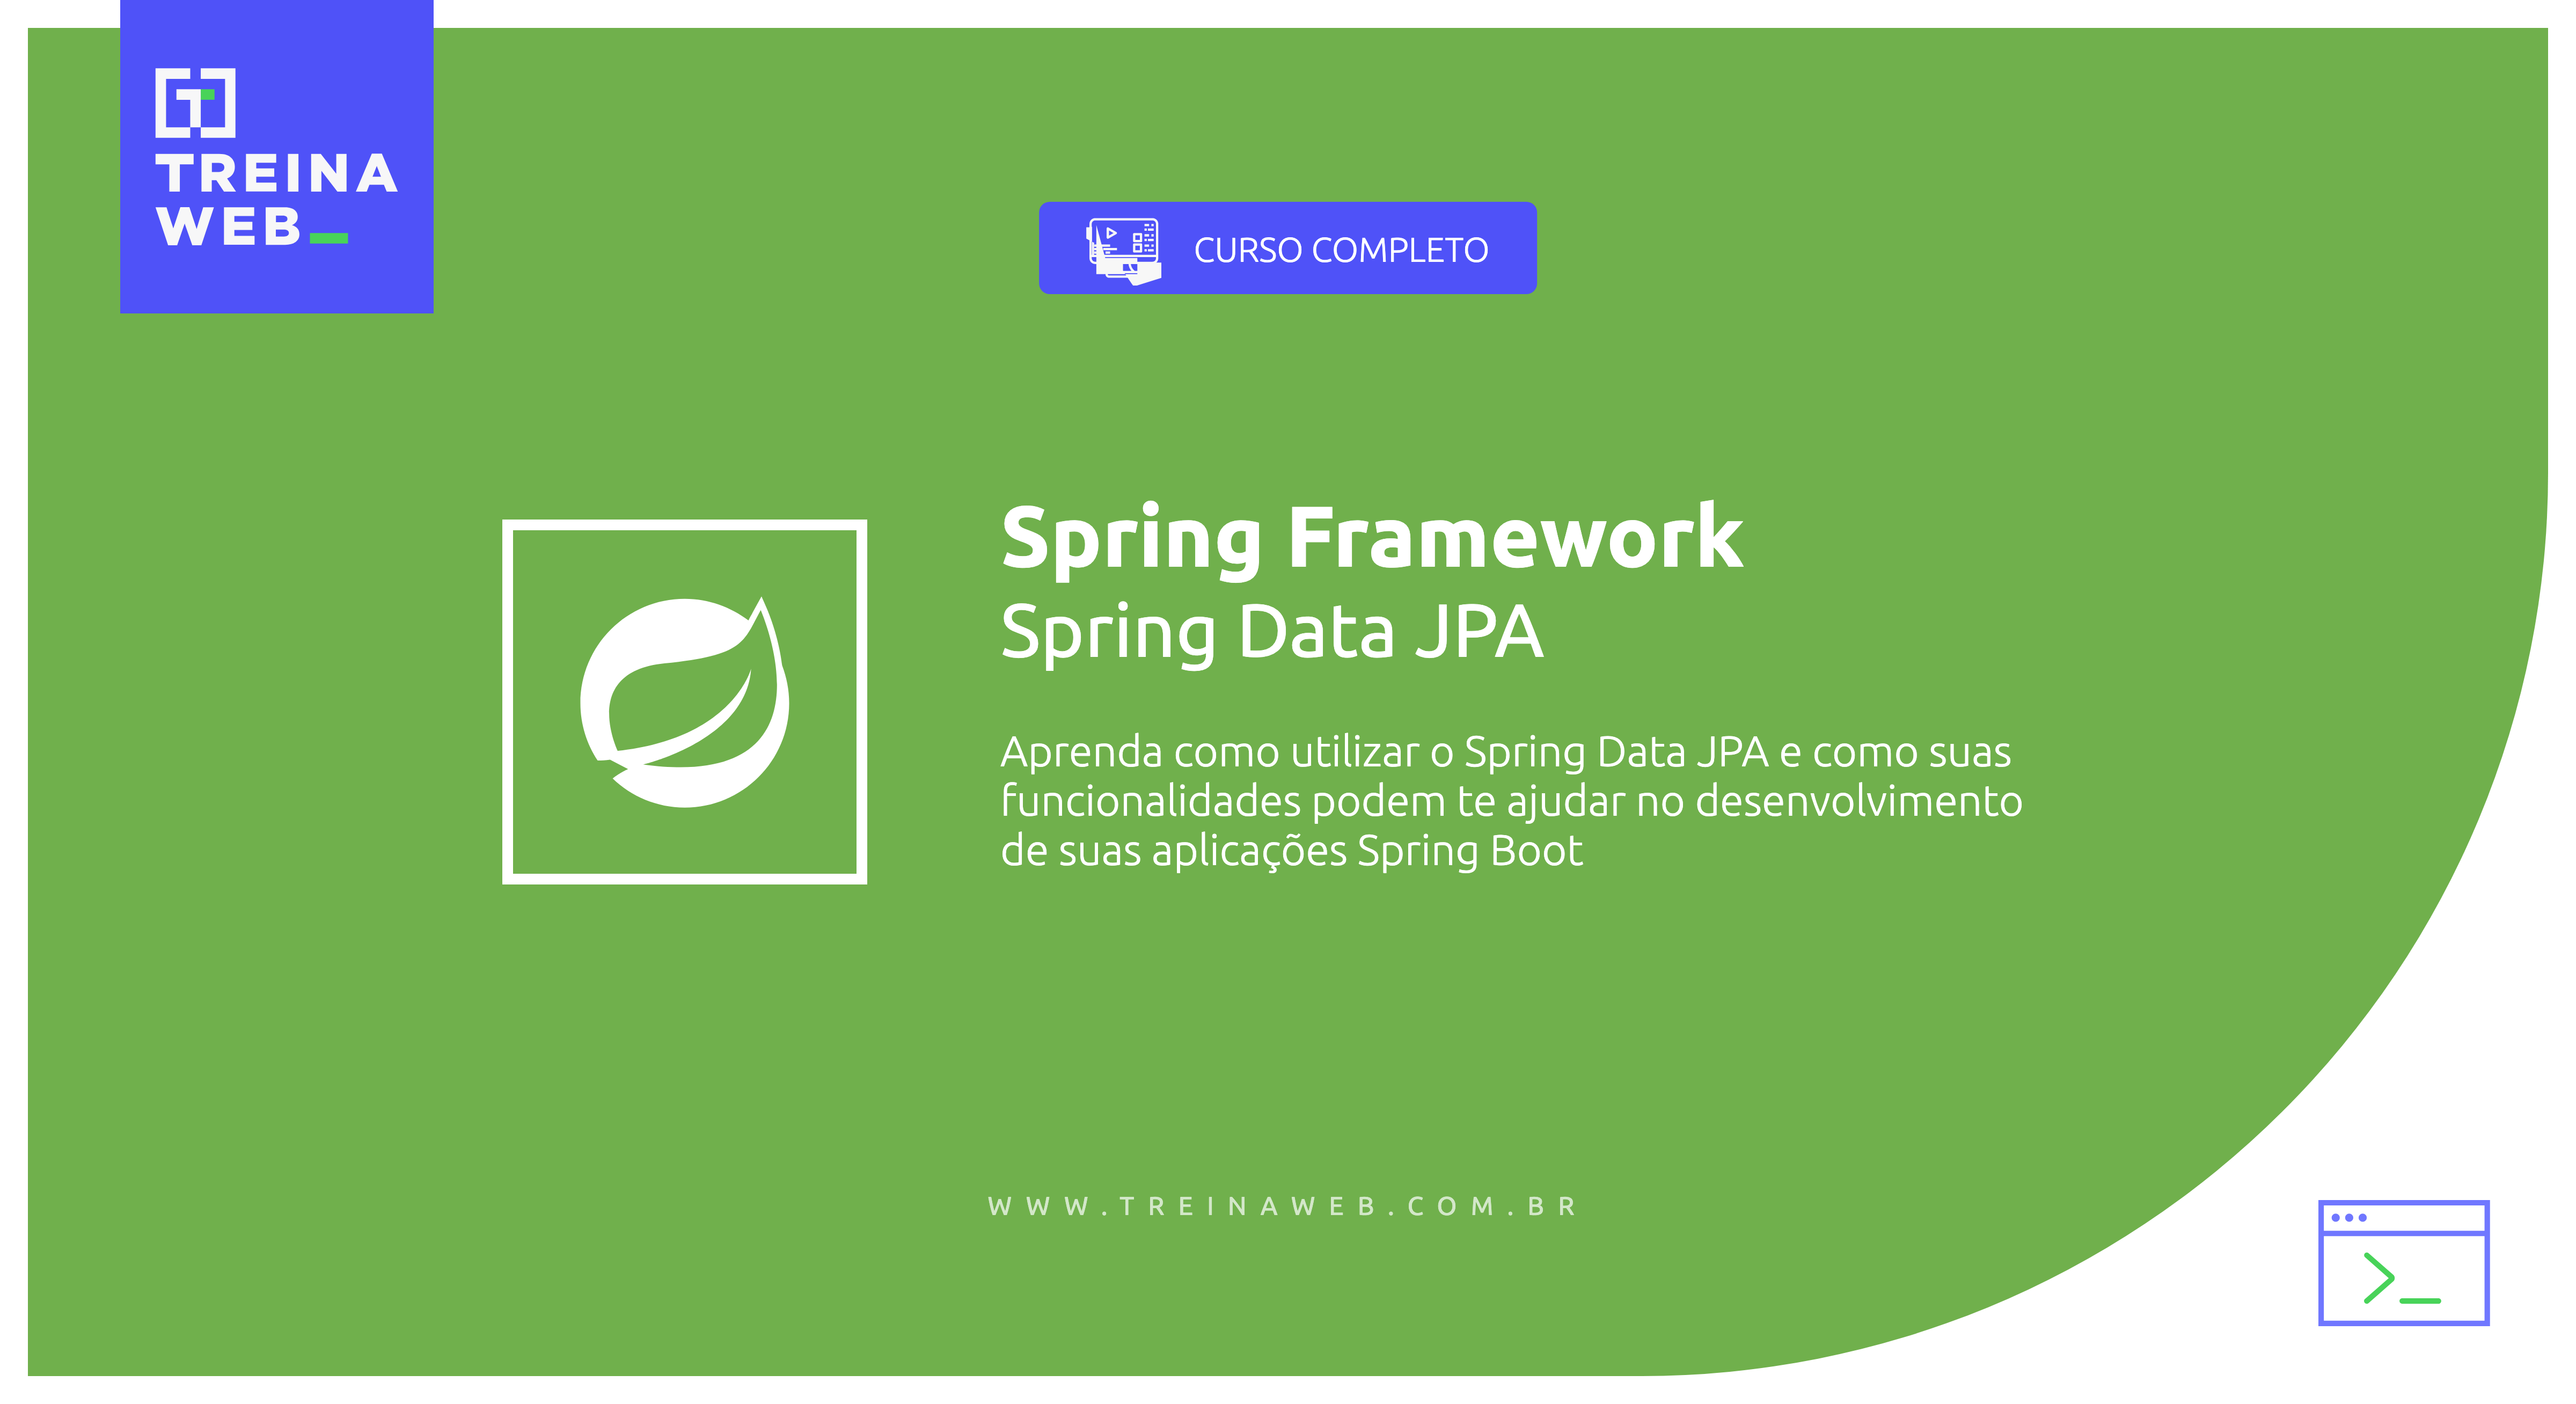 Imagem ilustrativa do curso Spring Framework - Spring Data JPA